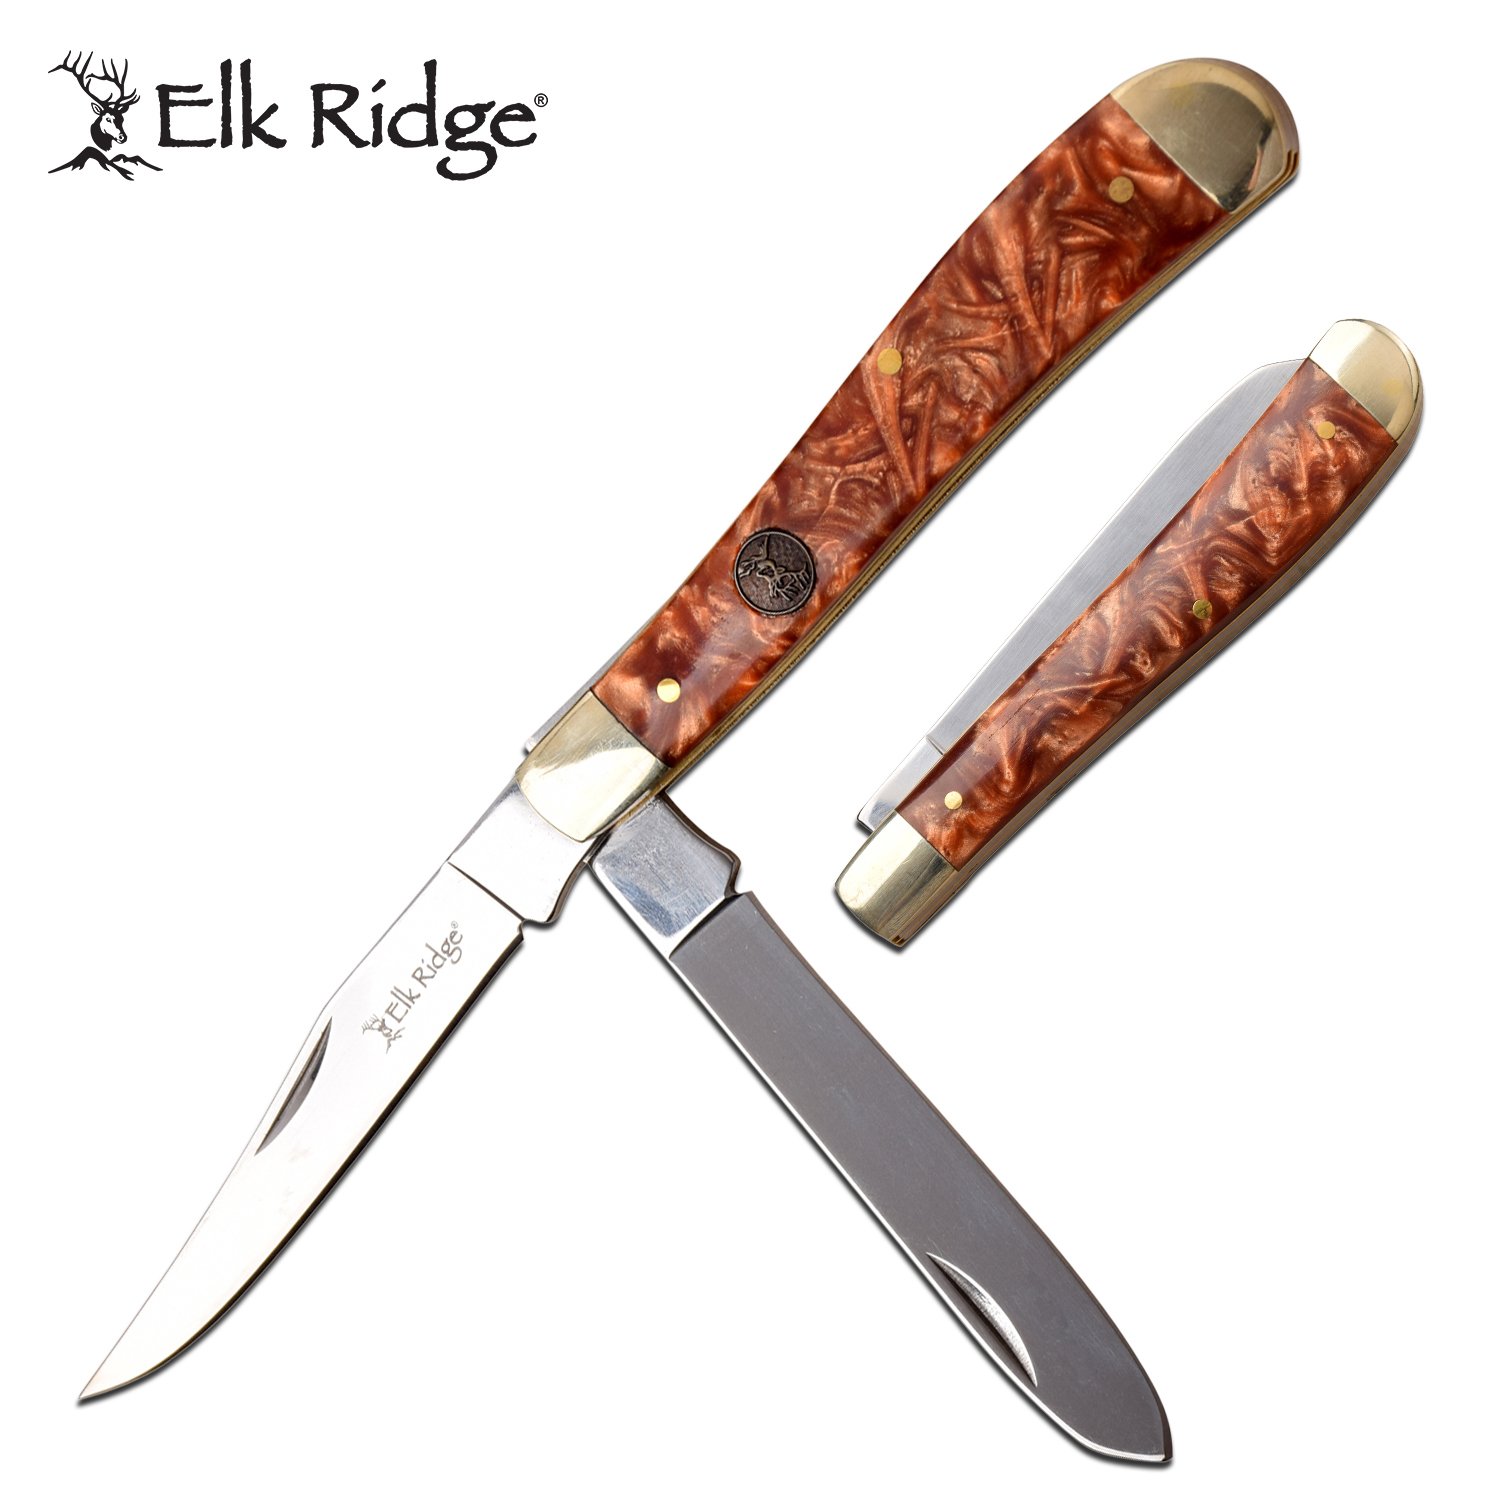 Folding Pocket Knife Elk Ridge 3.75in. Closed Classic Trapper 2 Blade Gift